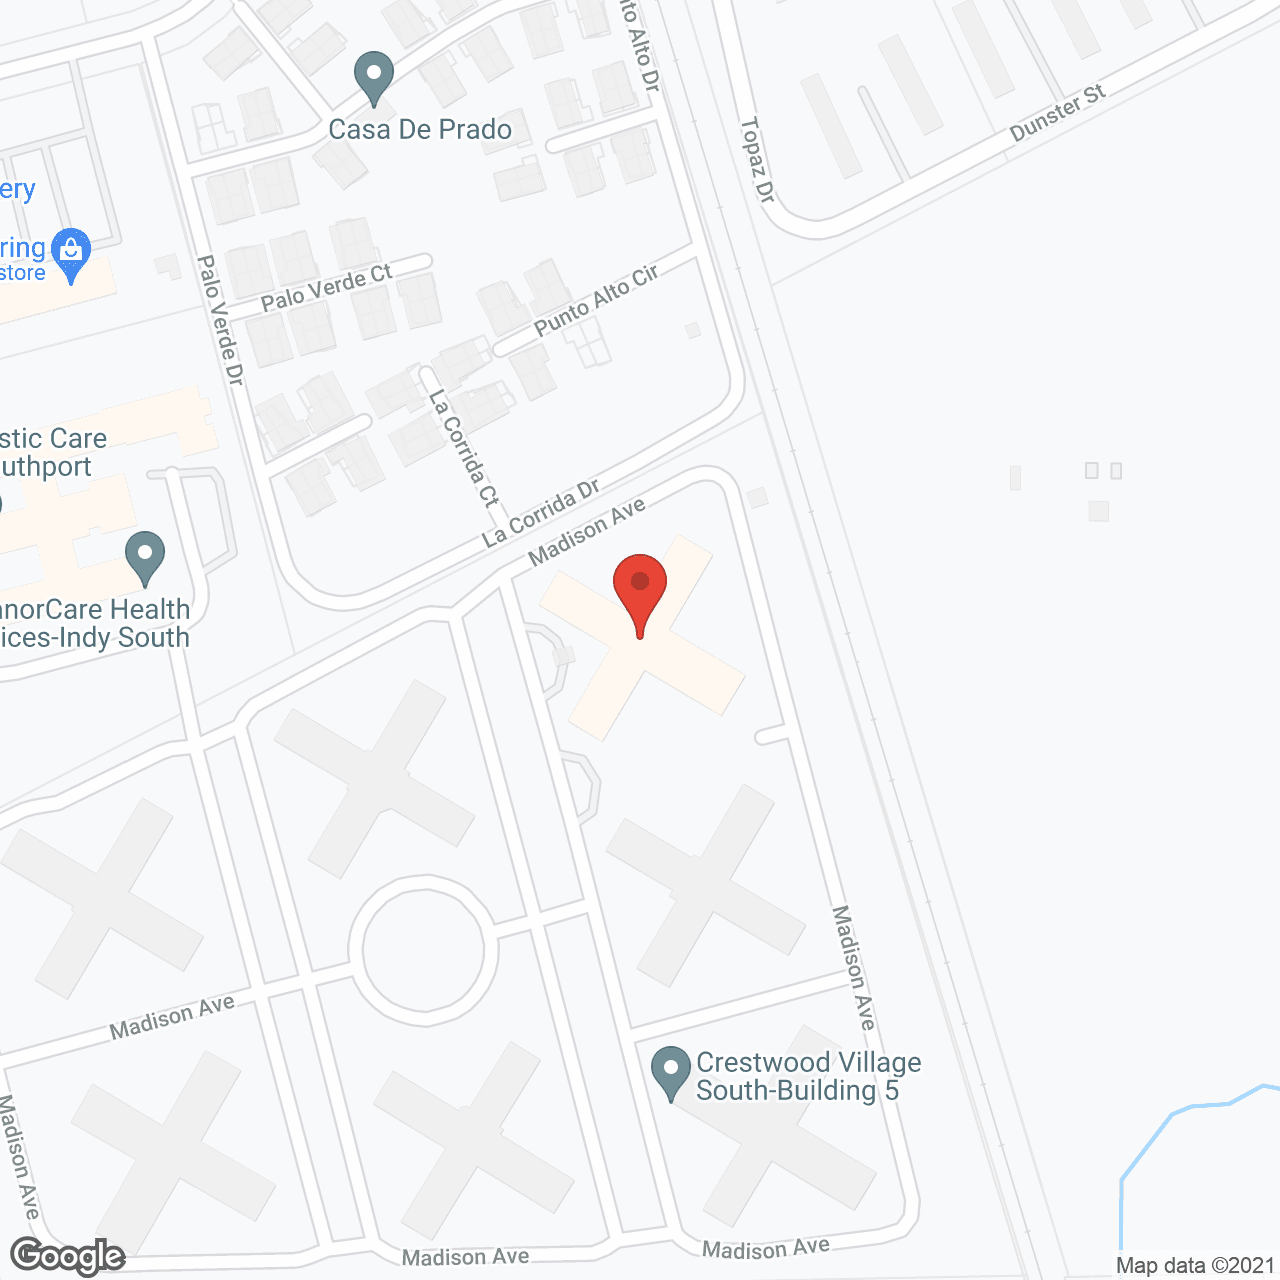 Crestwood Village South in google map